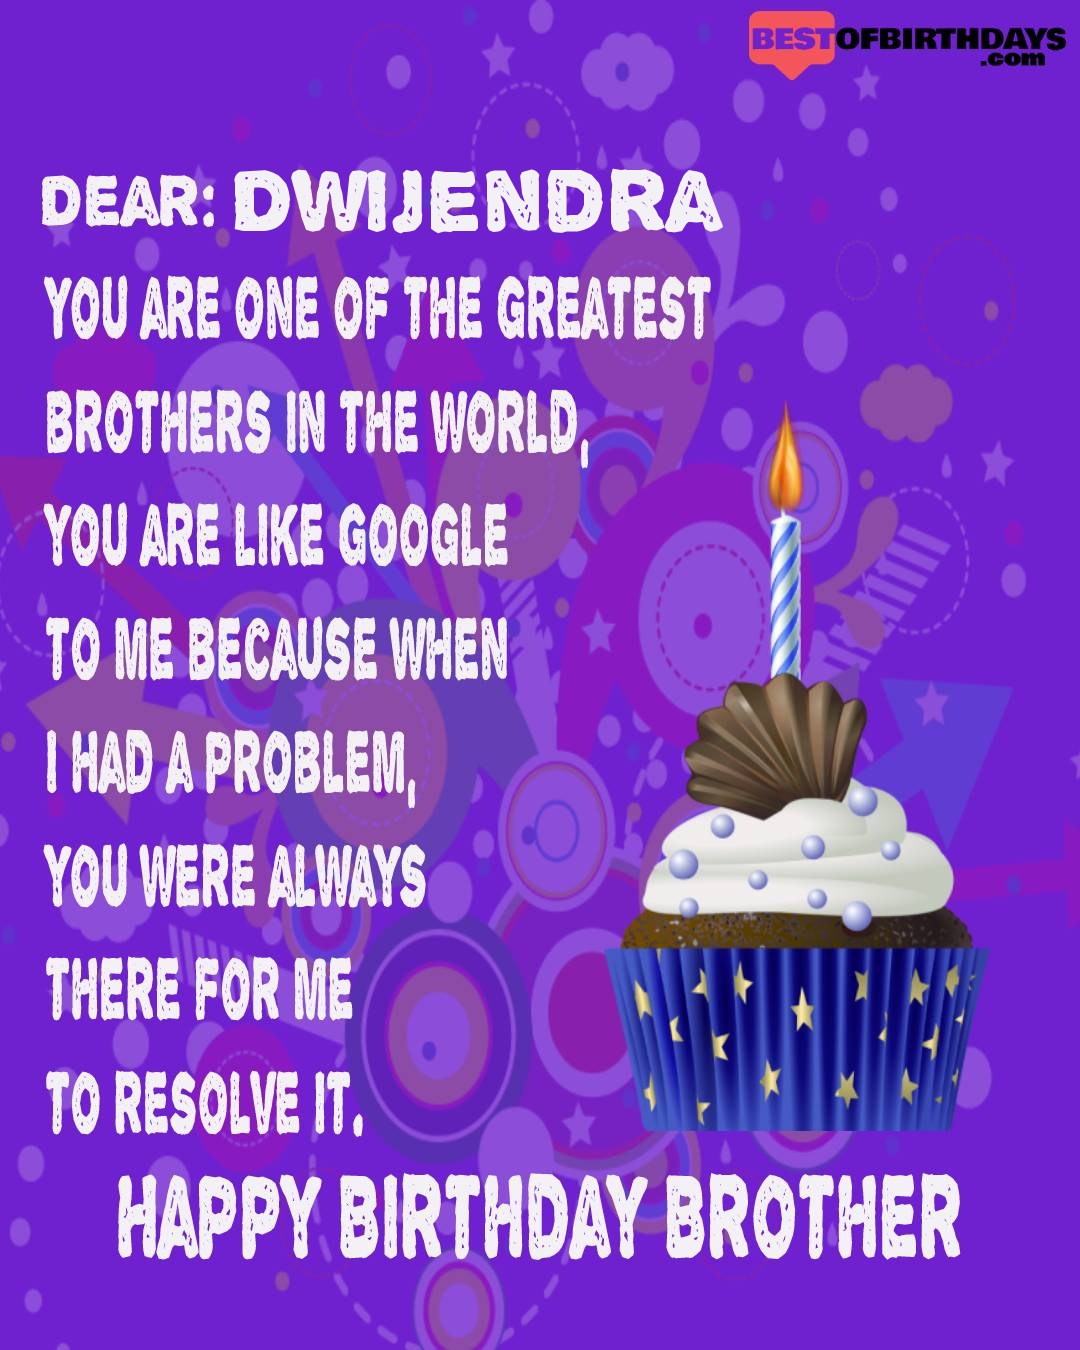 Happy birthday dwijendra bhai brother bro